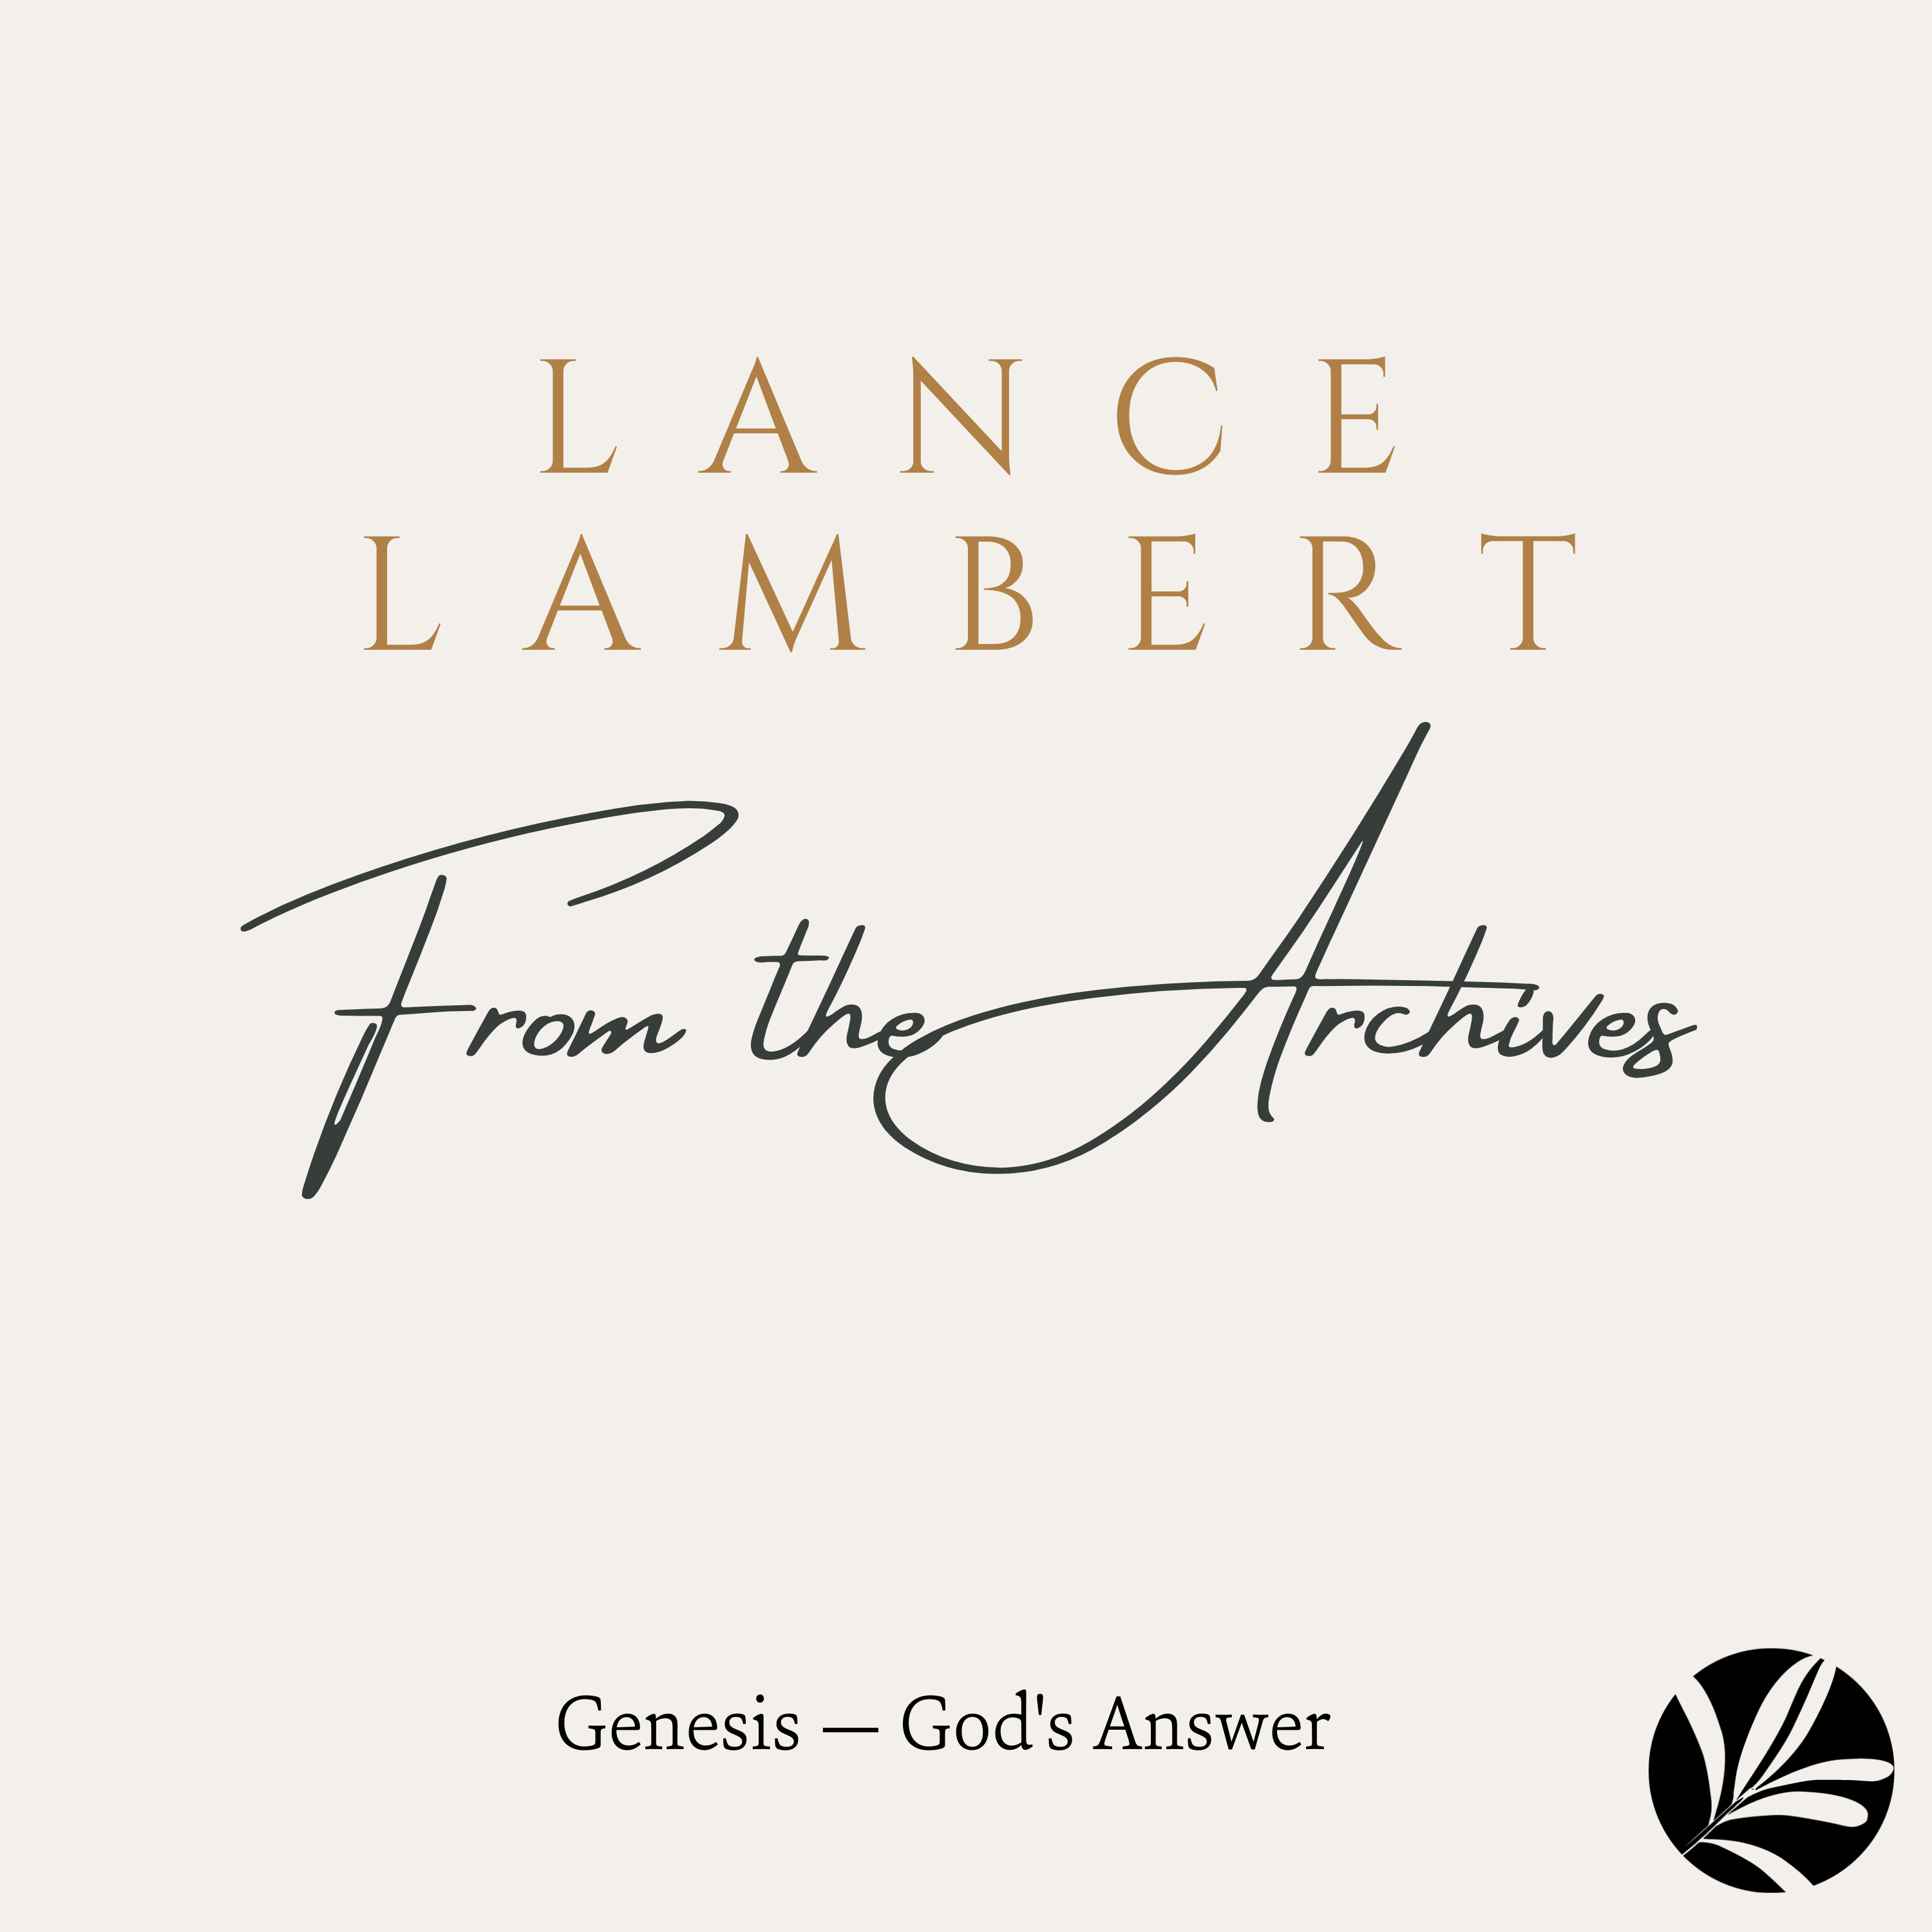 Genesis — God's Answer